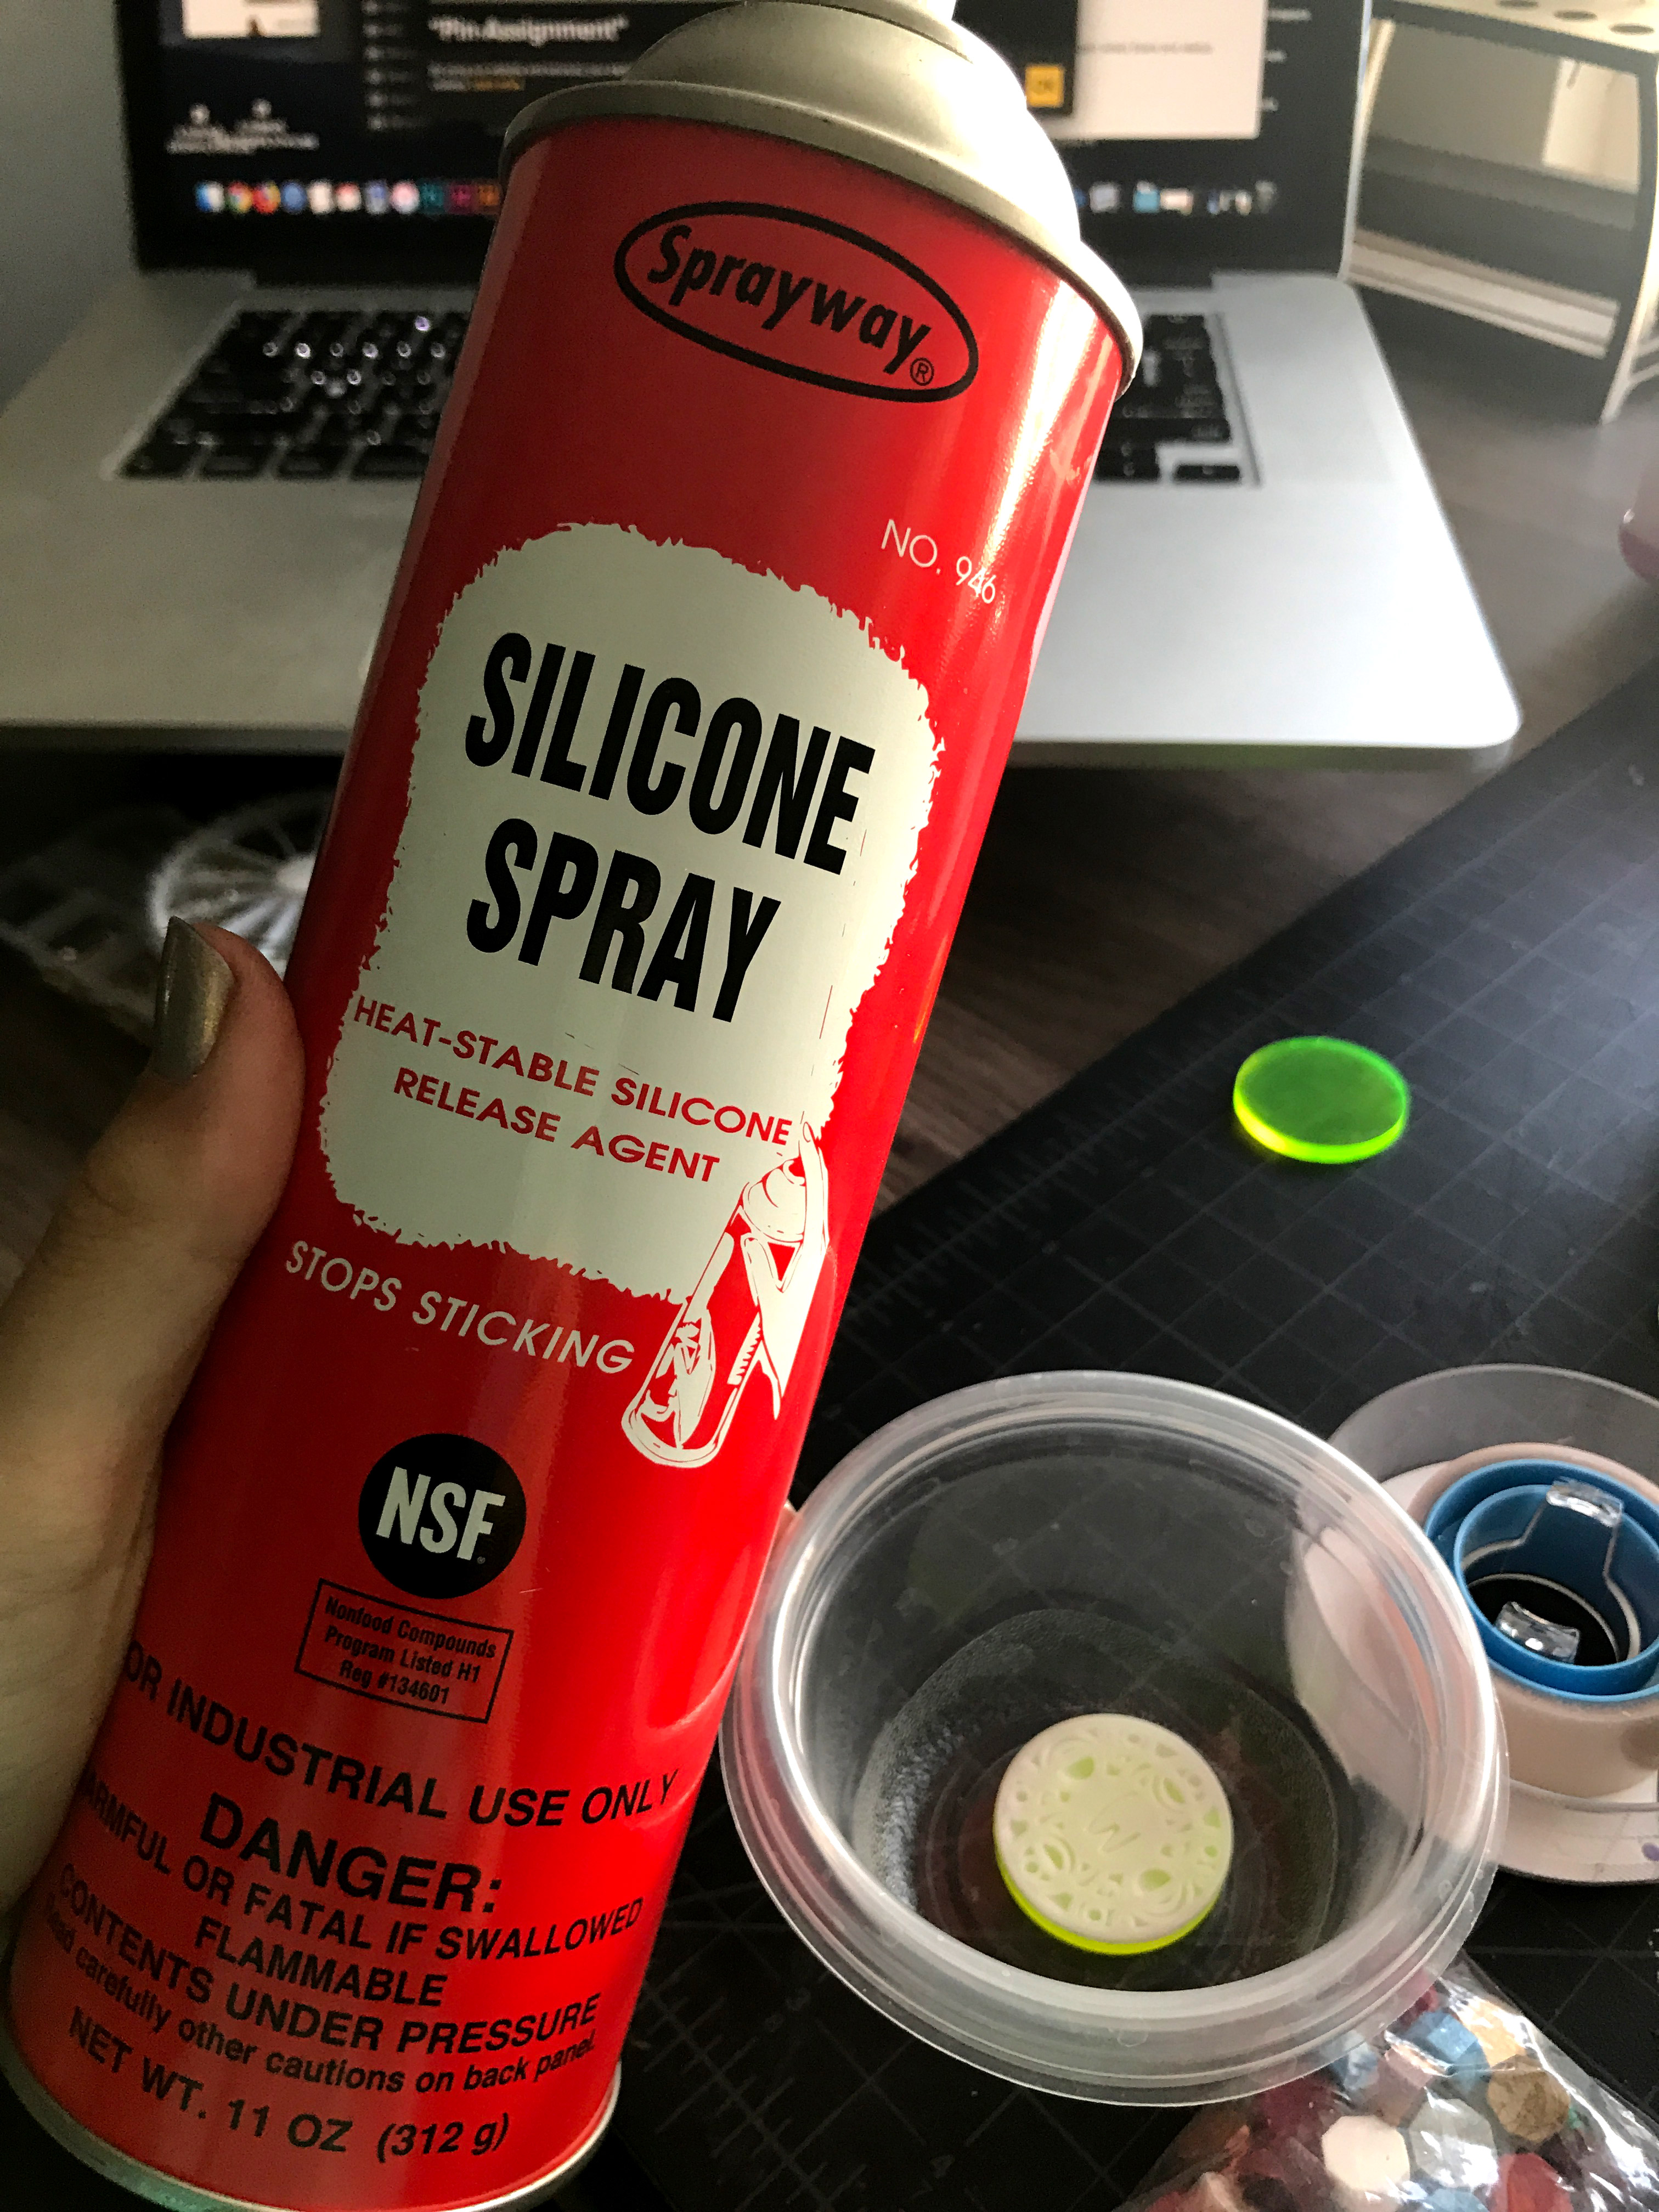 Discontinued - Sprayway Silicone Release Spray 945